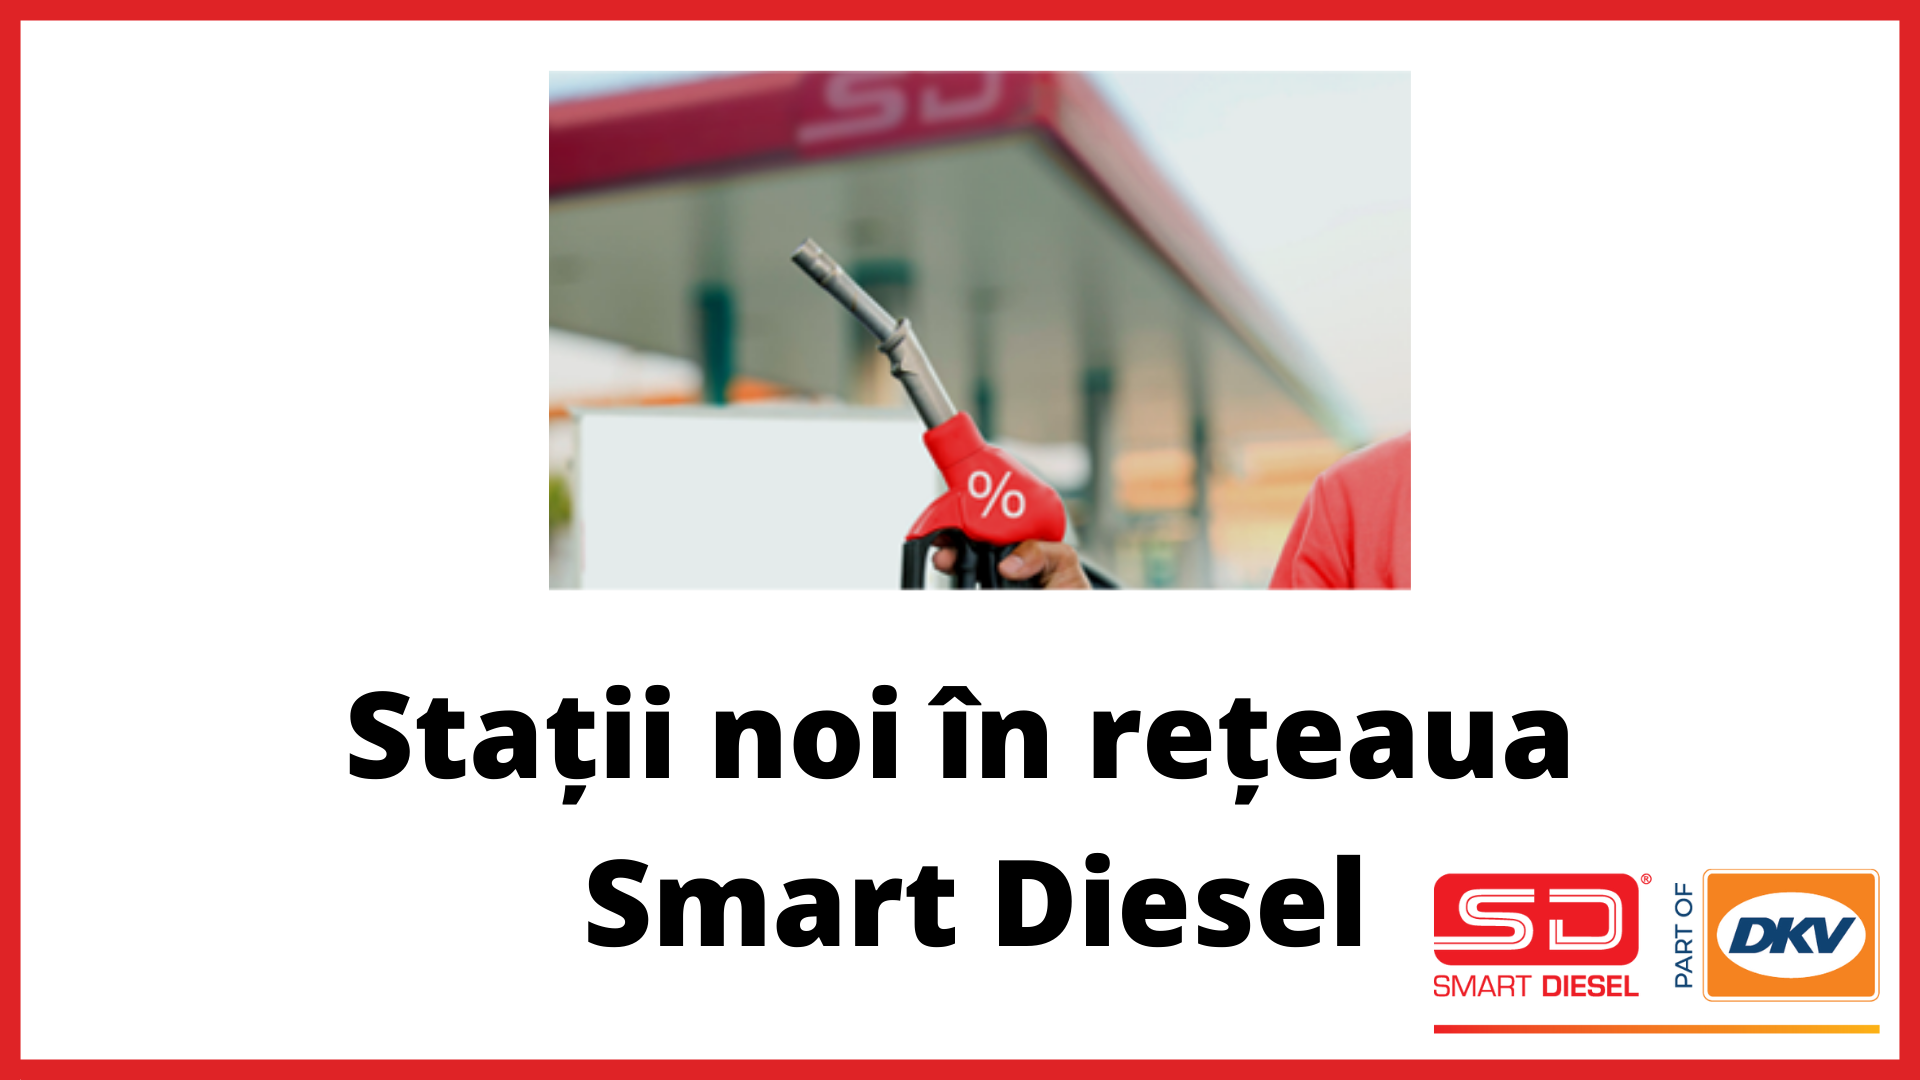 Smart Diesel isi extinde reteaua cu noi statii la Bacau si Arad